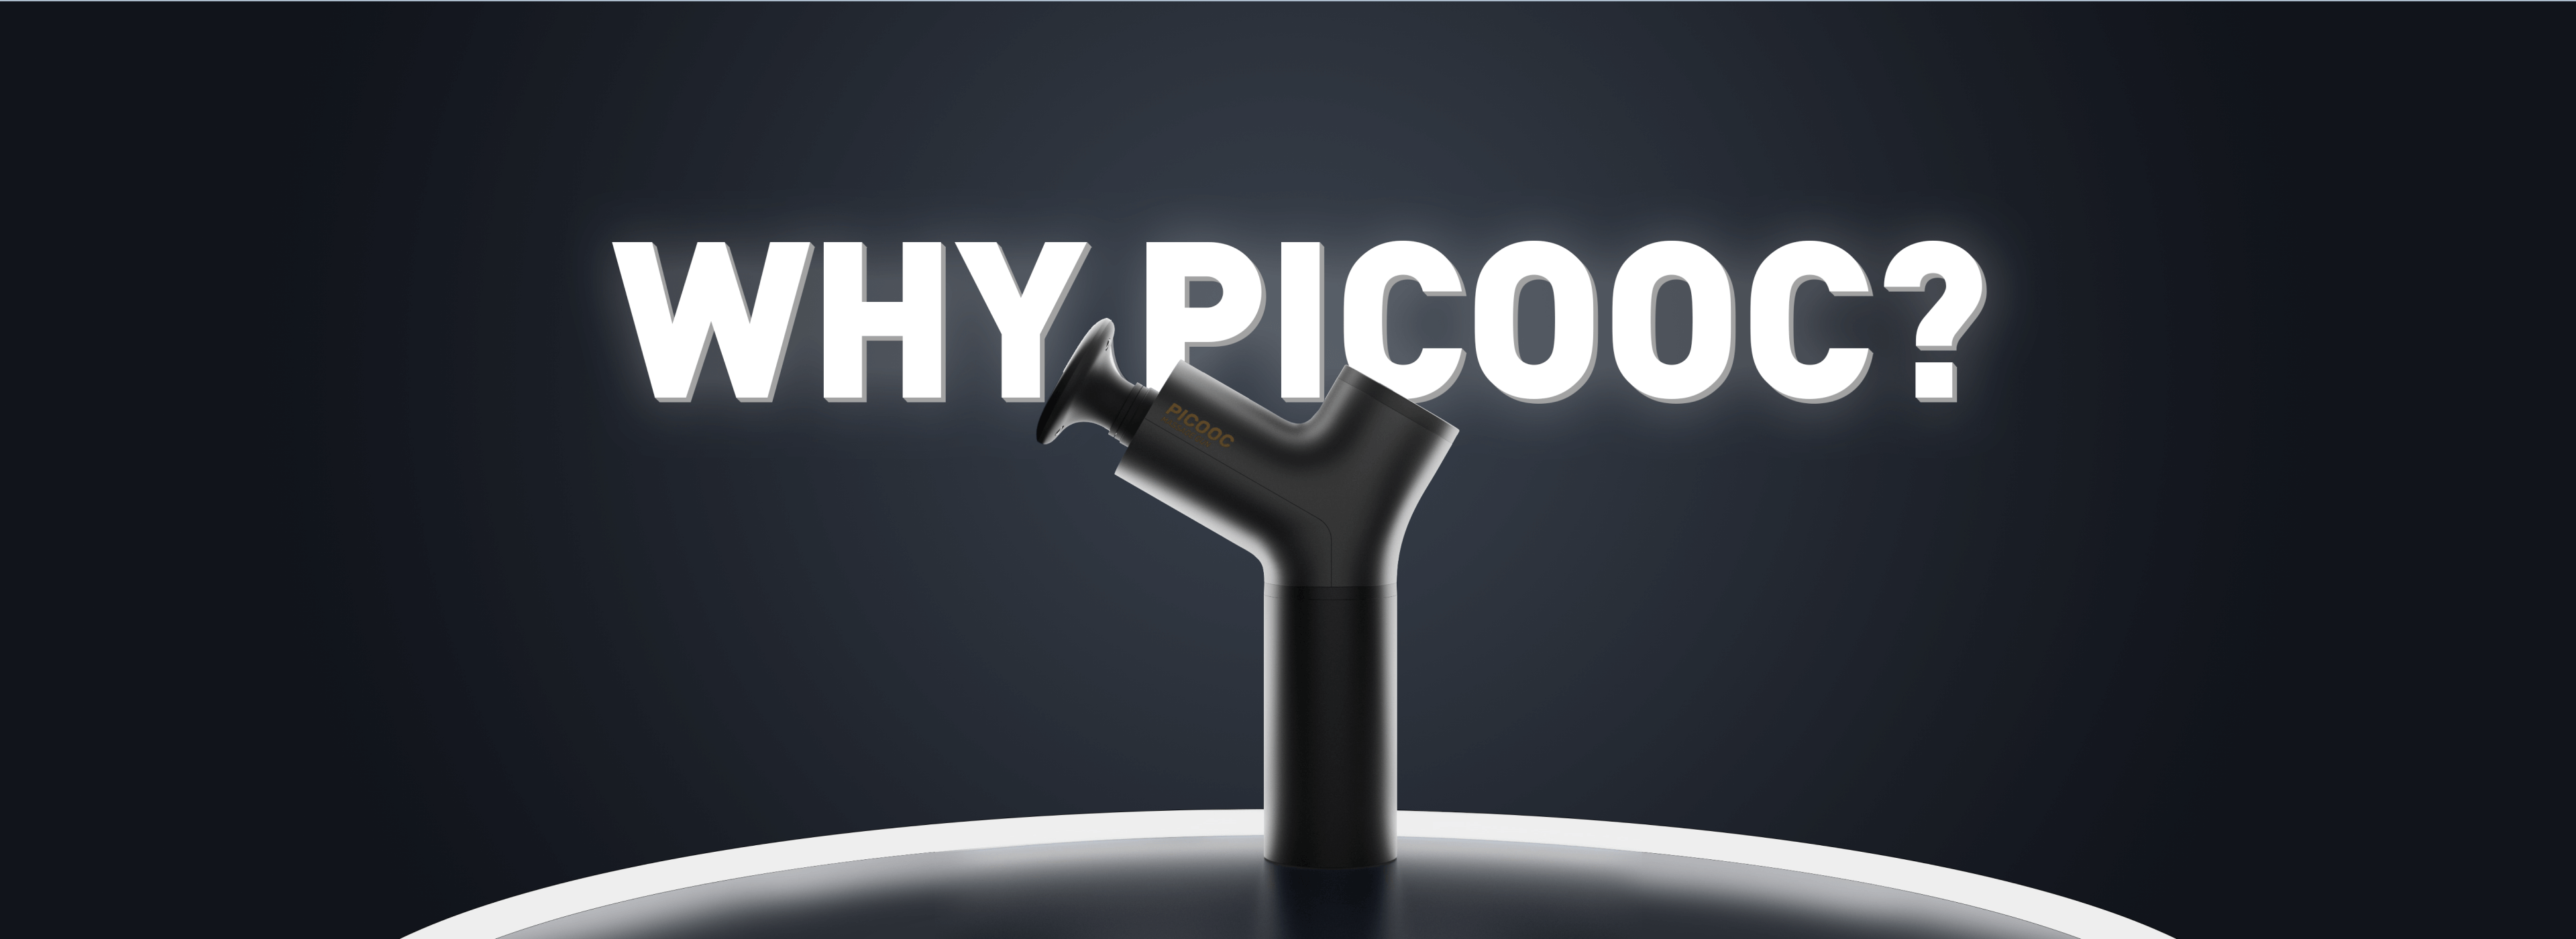 WHY PICCOC